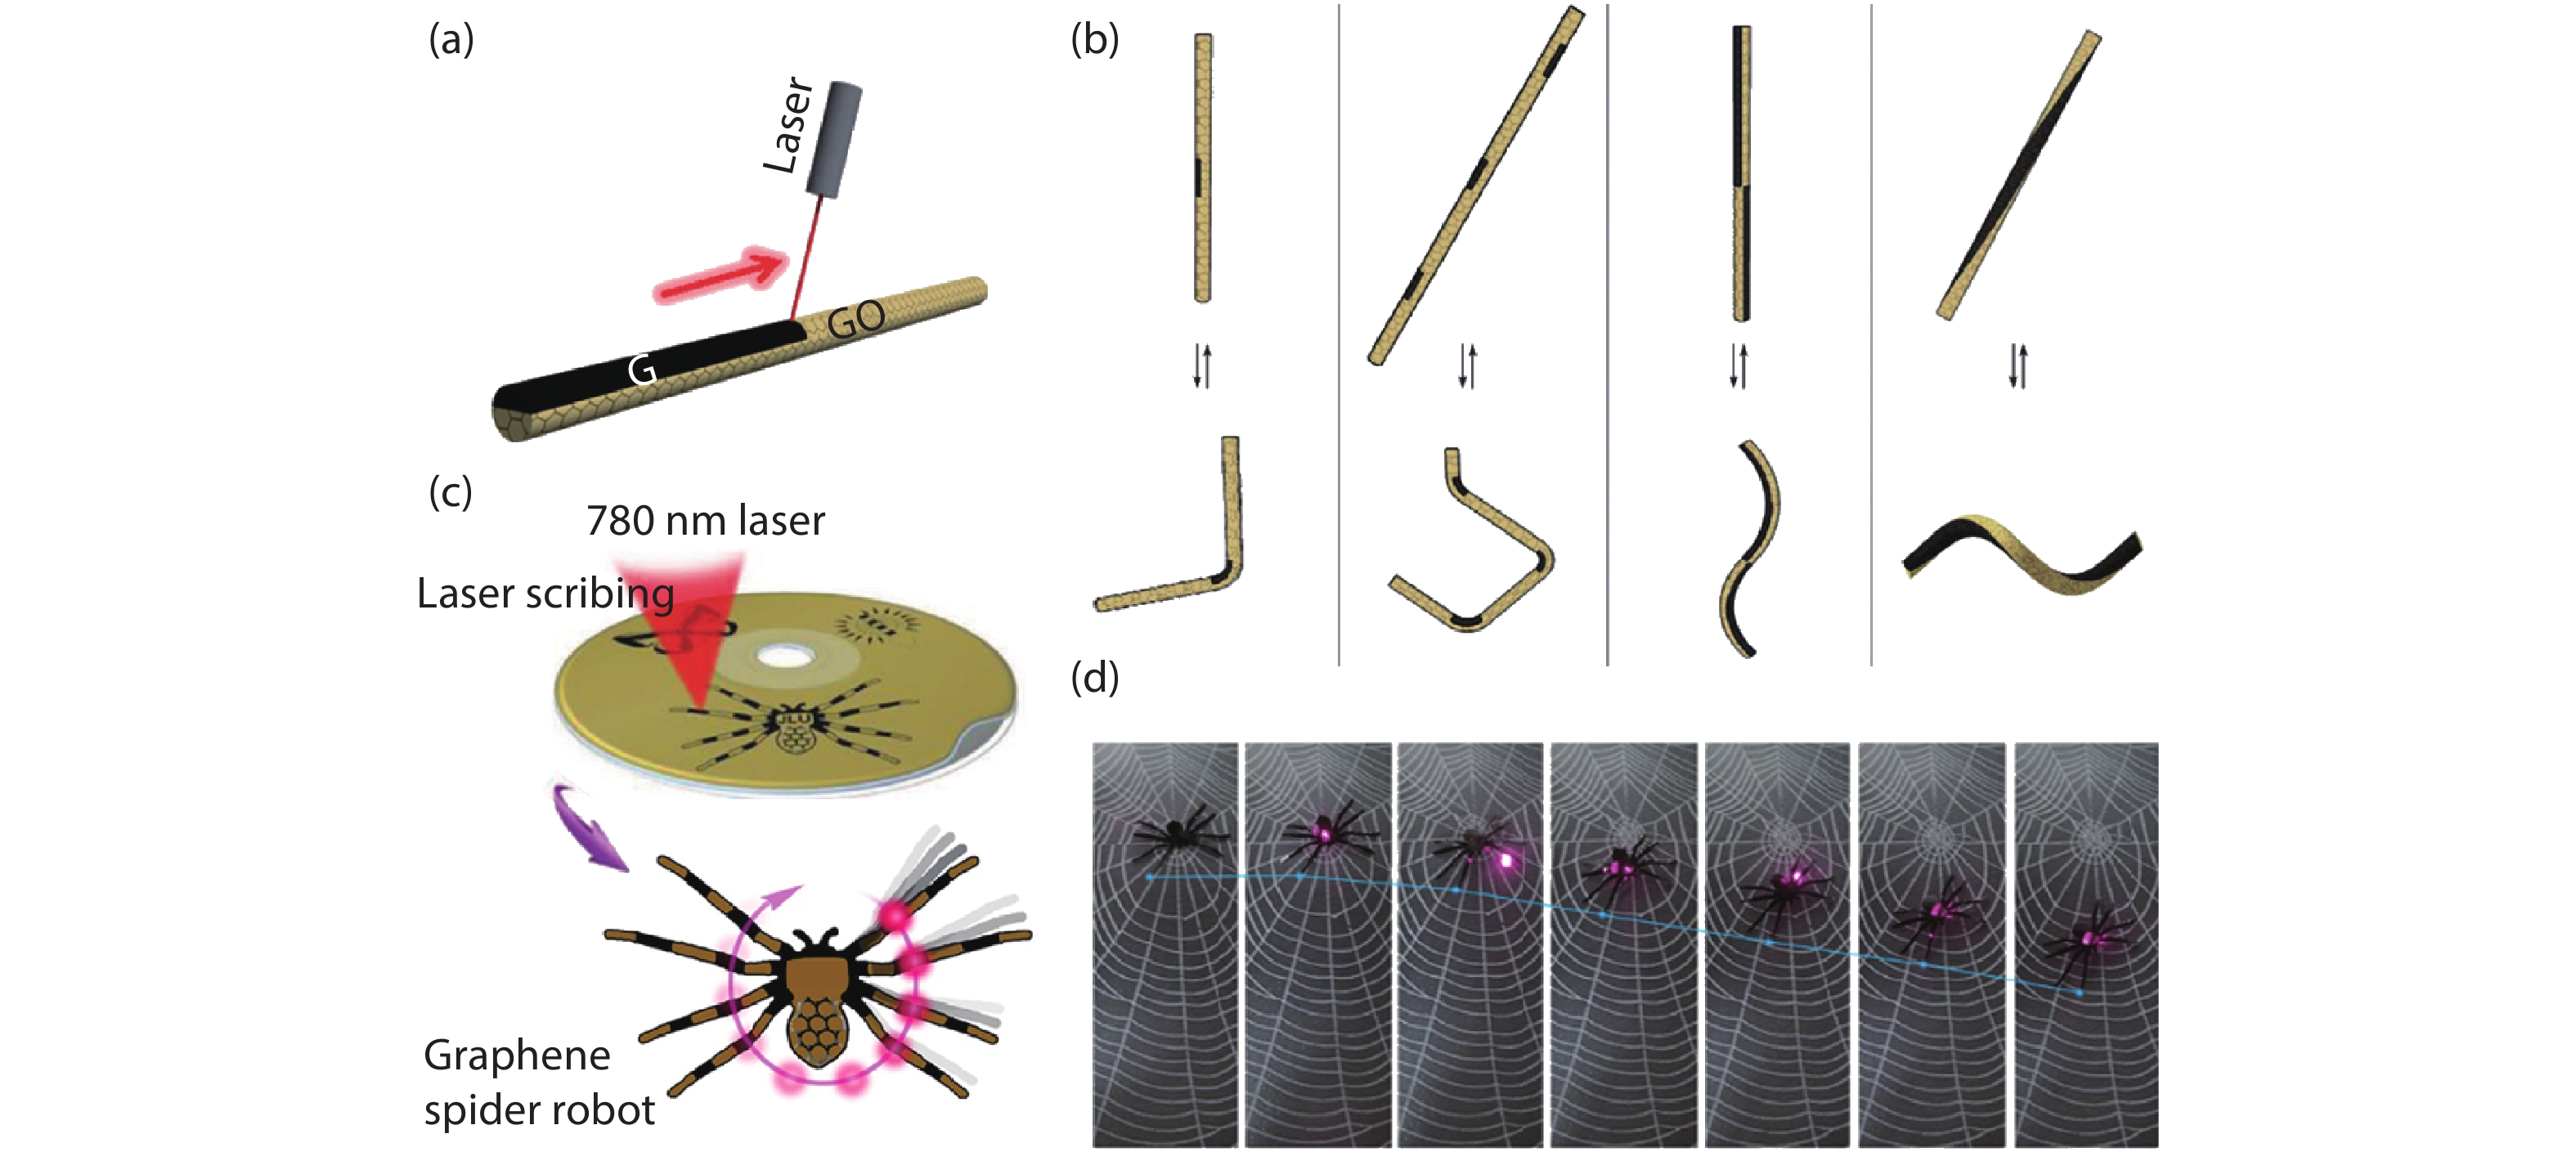 (Color online) (a) Laser reduction of GO fiber. (b) Various predesigned GO actuators. (c) Graphene spider robot made by one-step laser scribing method. (d) The walking spider robot.